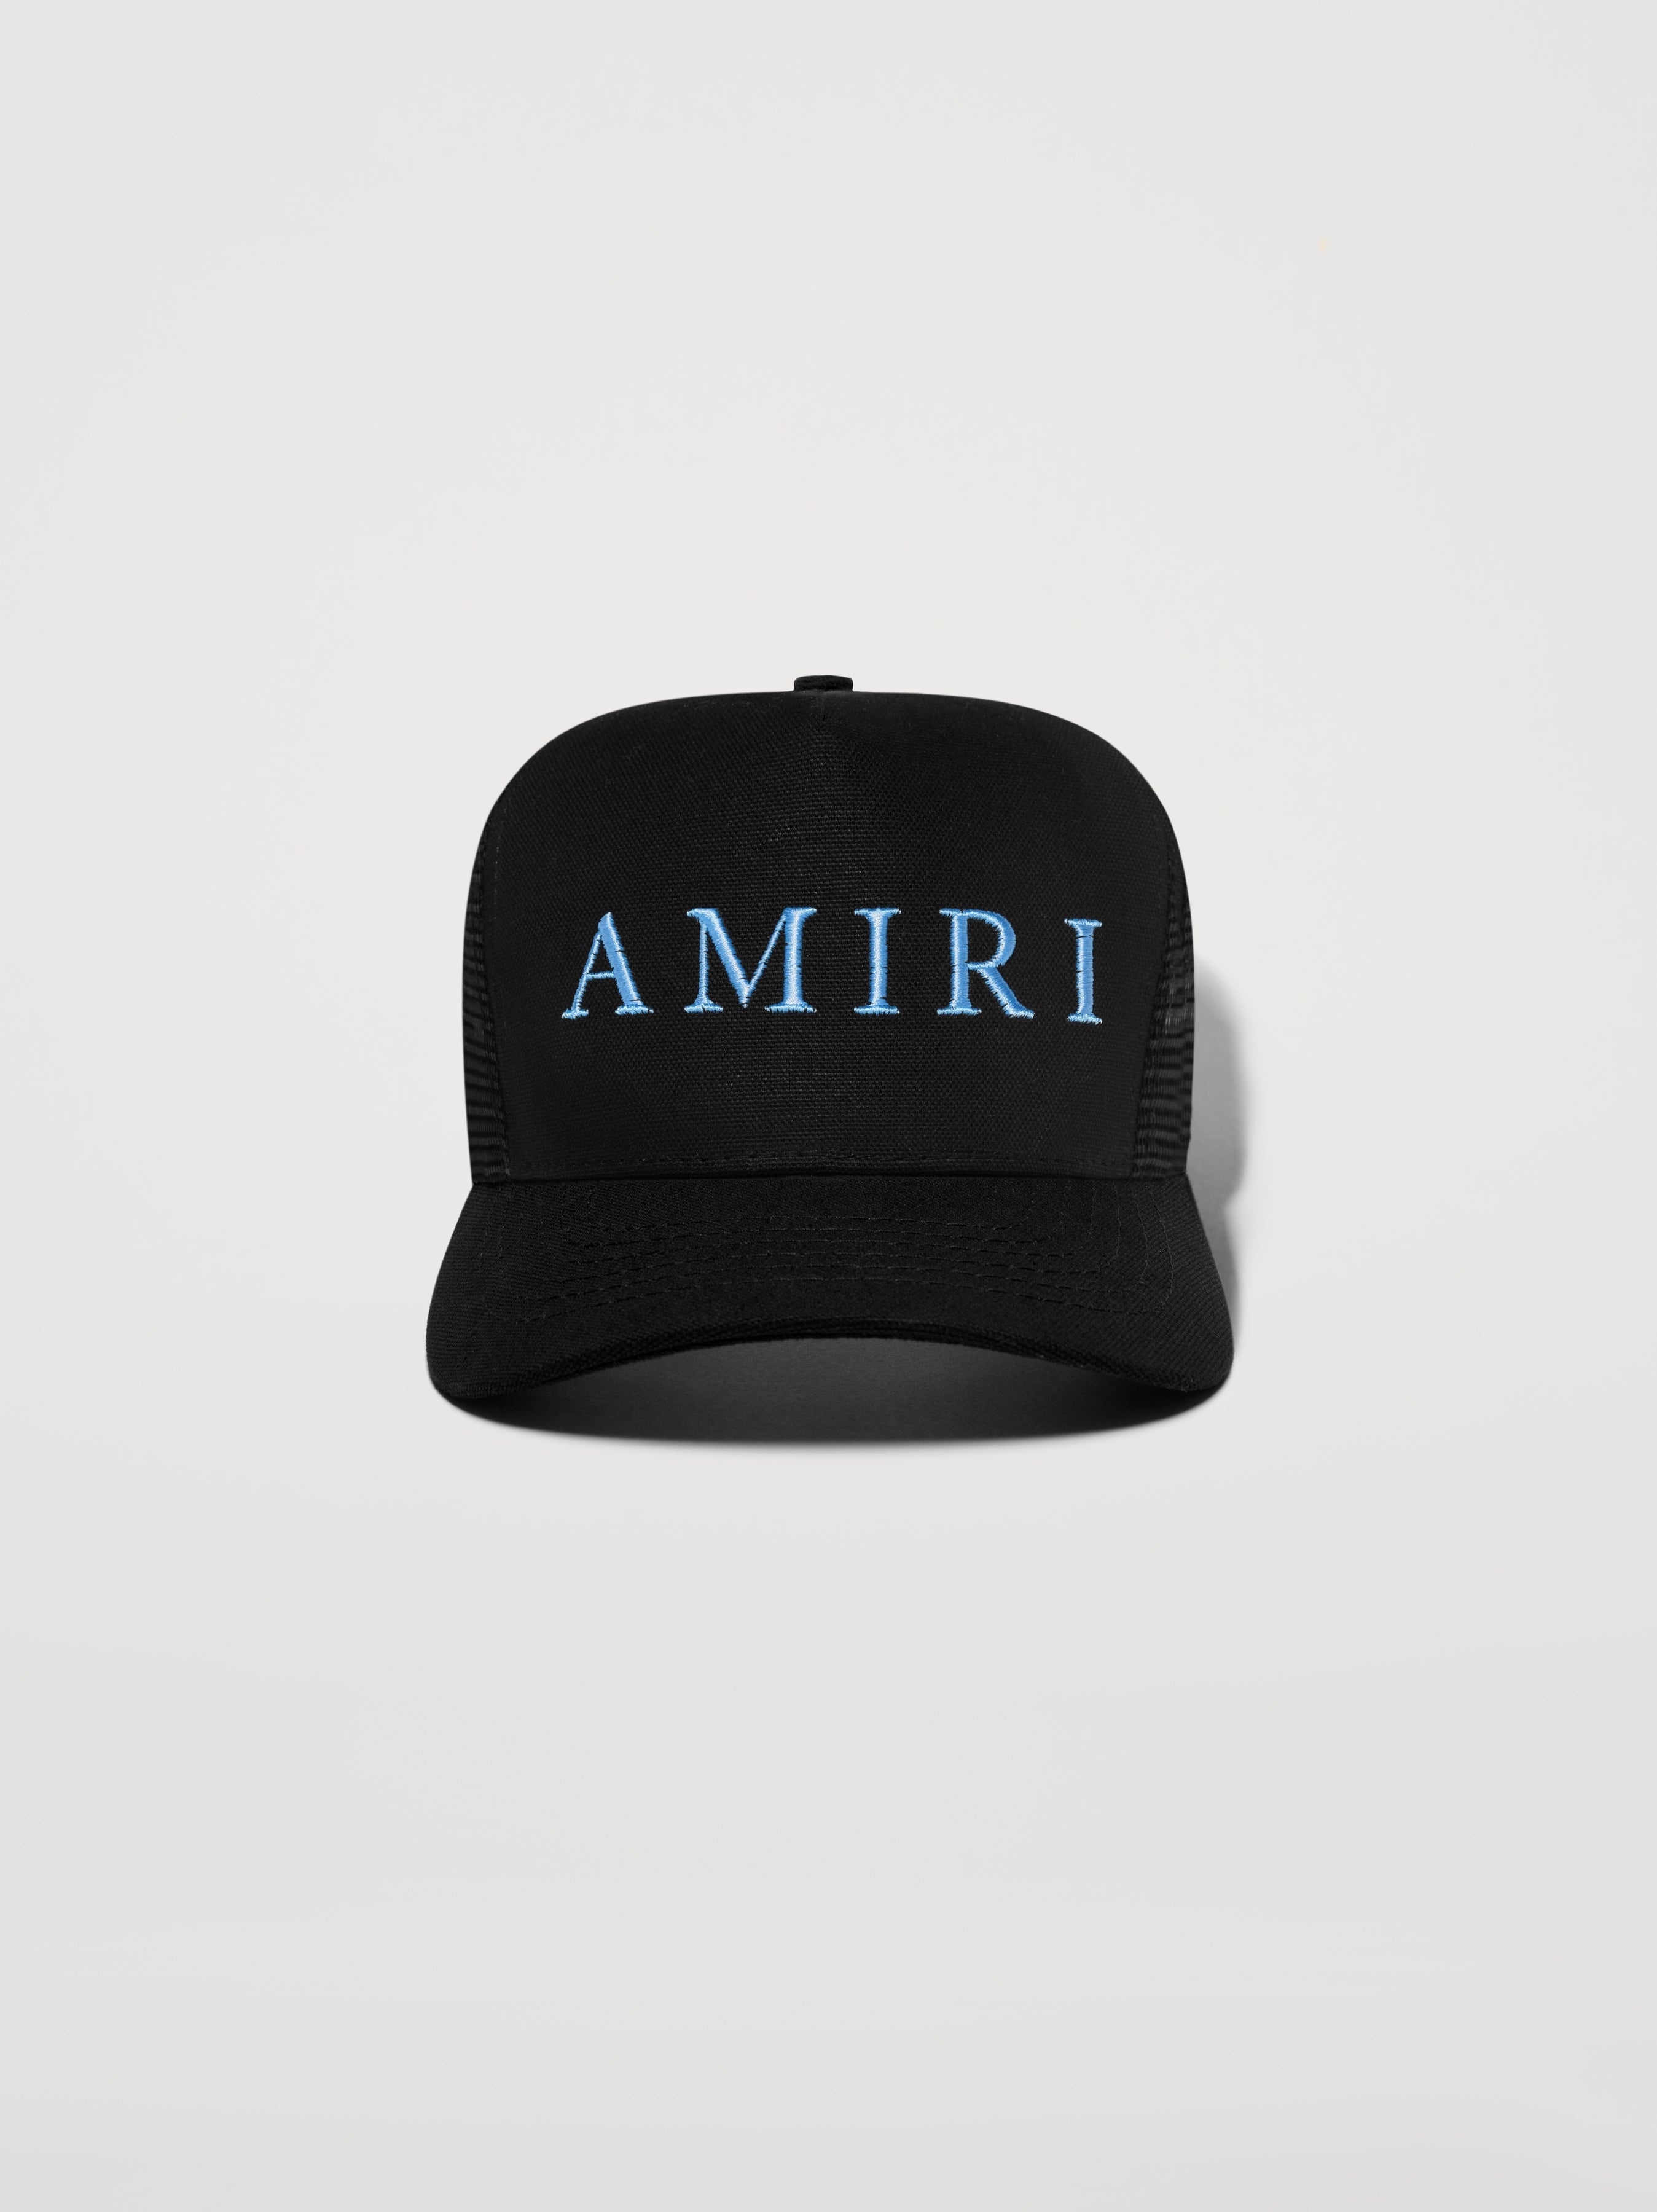 AMIRI TRUCKER - 1